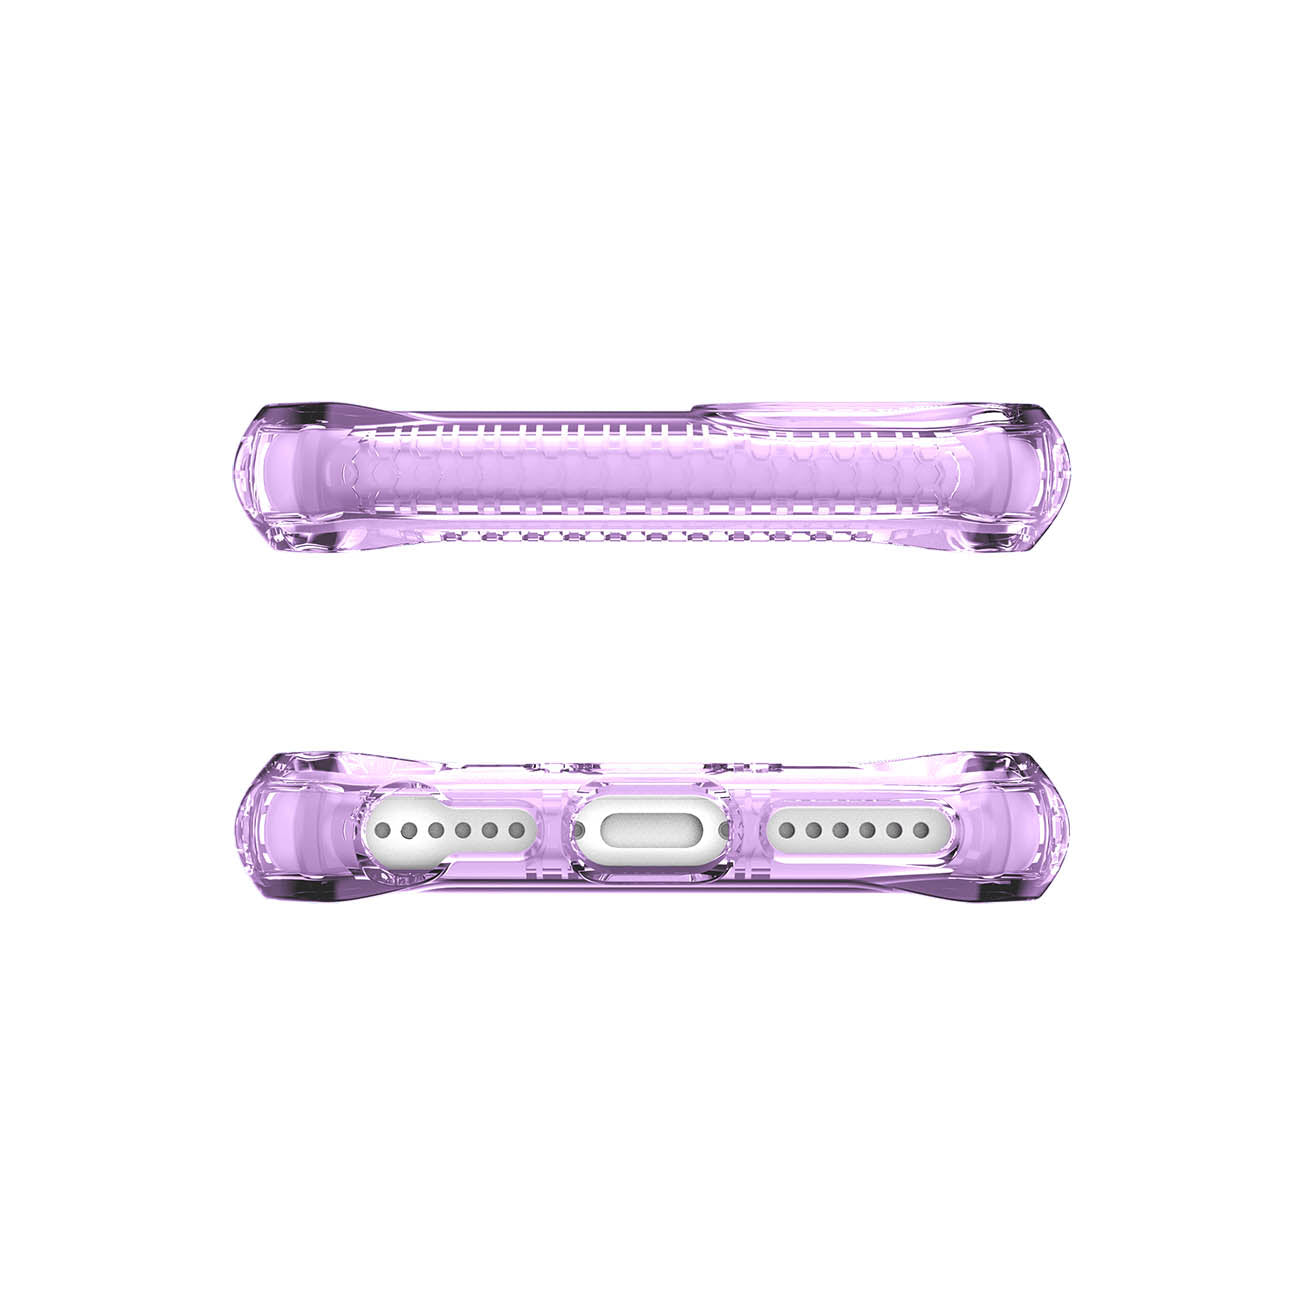 ITSKINS Spectrum Clear Case For iPhone SE ( 2022, 2020 ), 8, 7, 6 - Light Purple